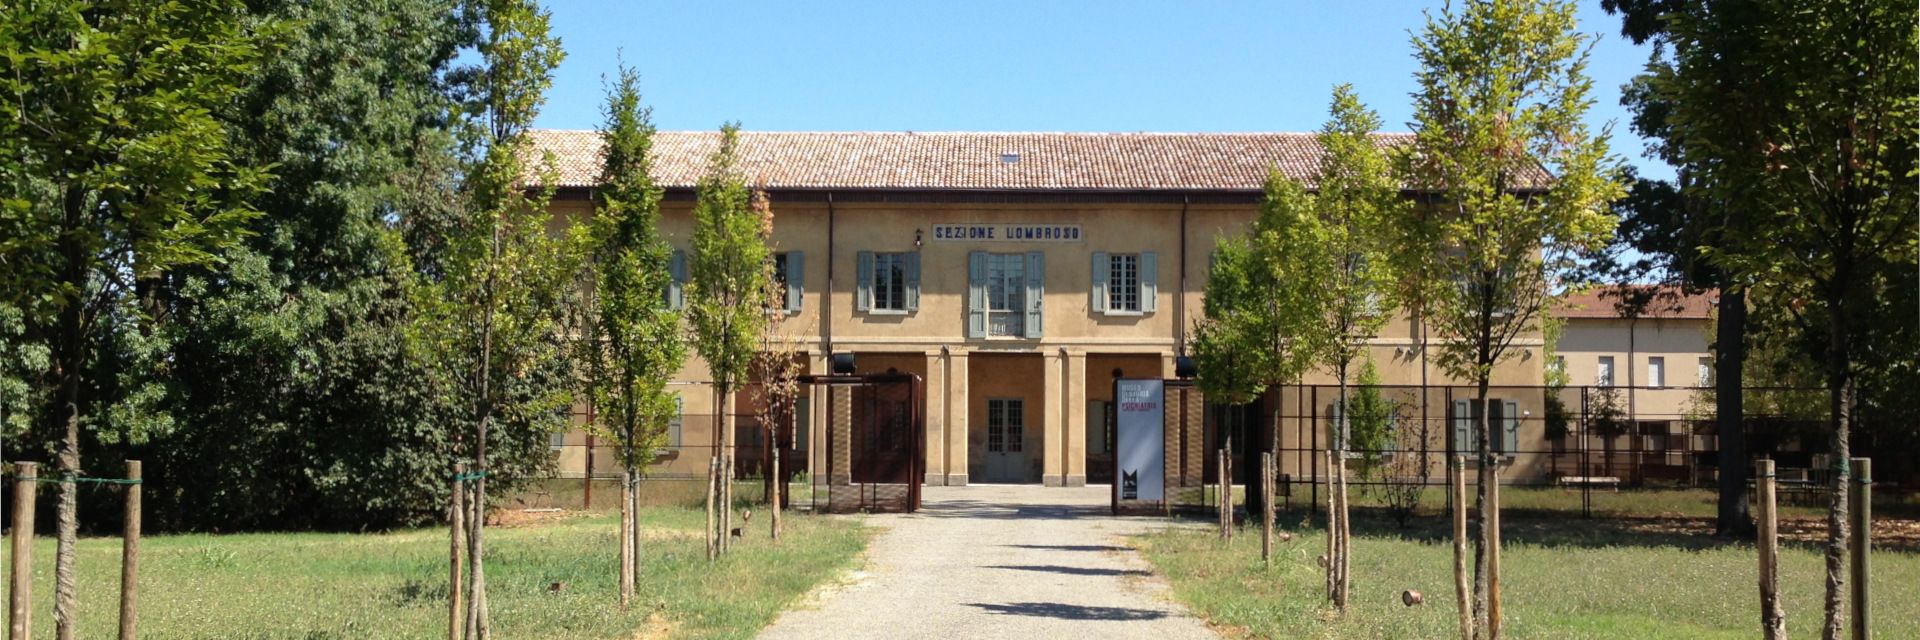 Reggio Emilia Museum of the History of Psychiatry